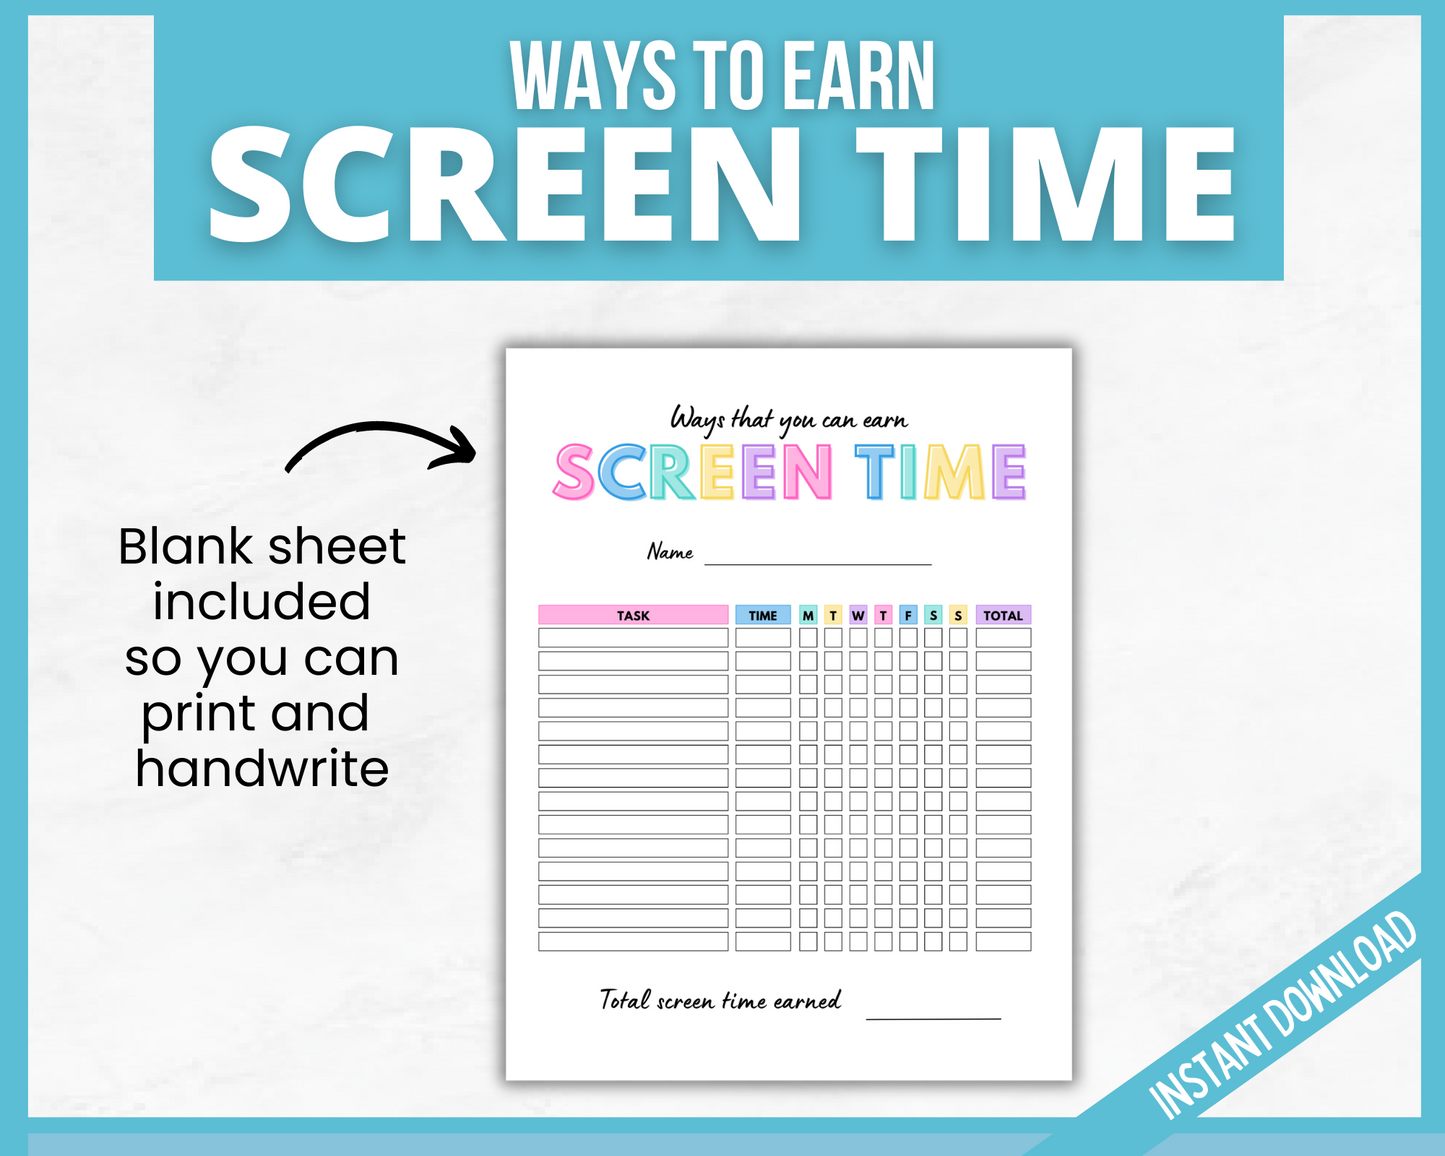 Printable Kids Ways to Earn Screentime tracker